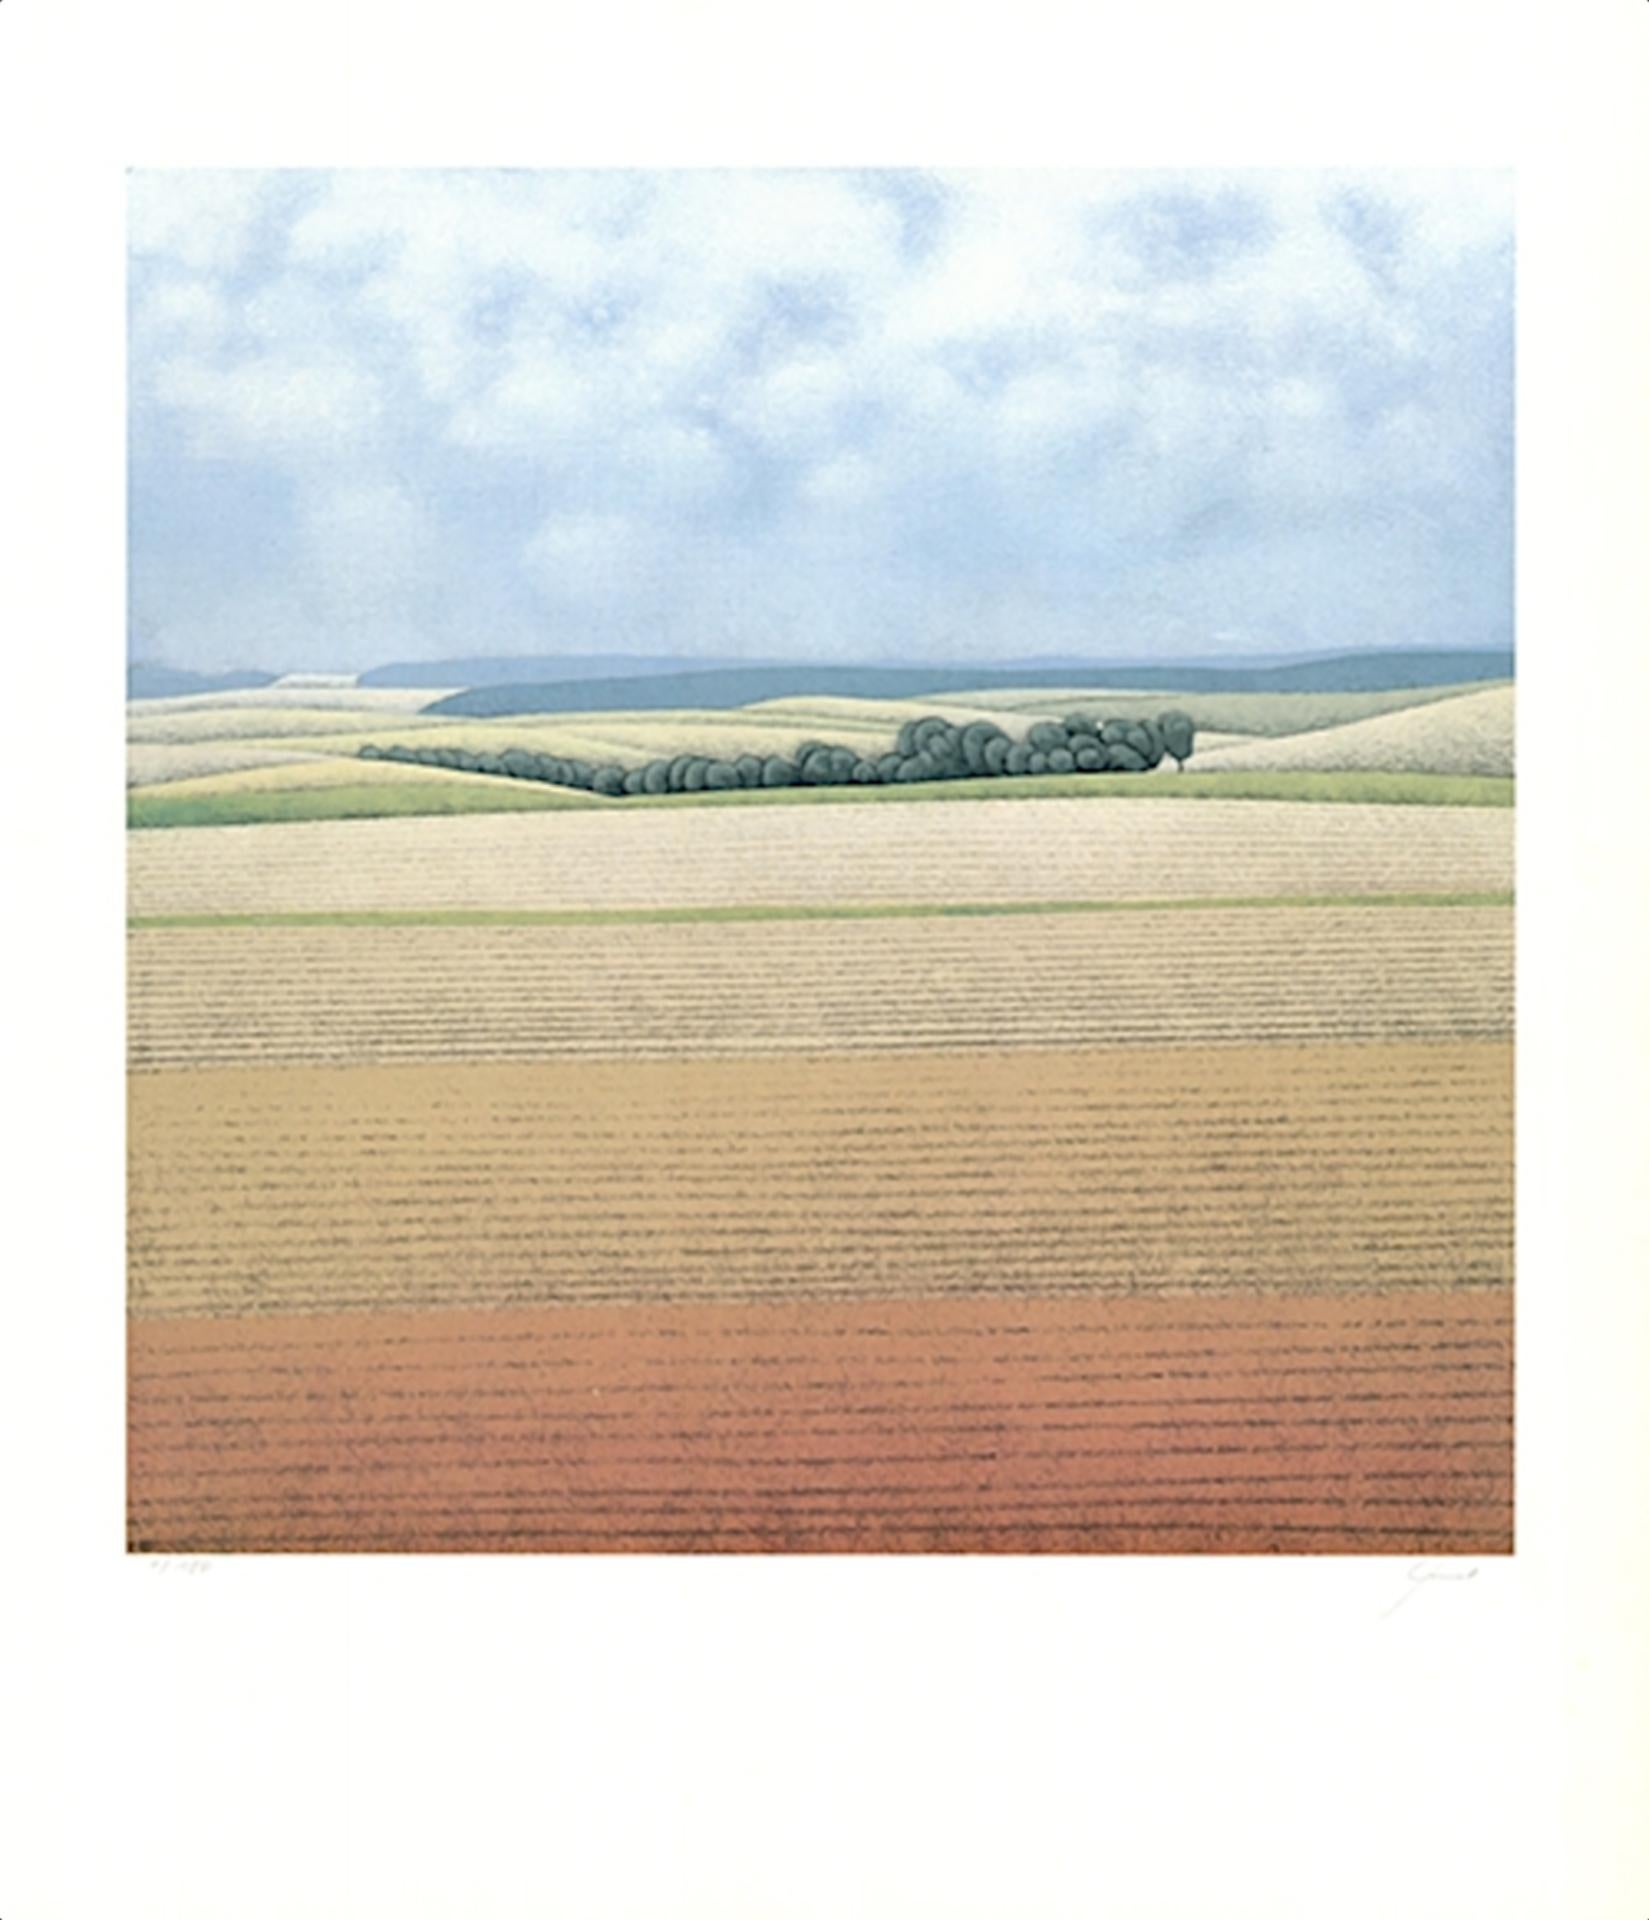 Gerhard Taubert - "Landscape" - color offset lithograph